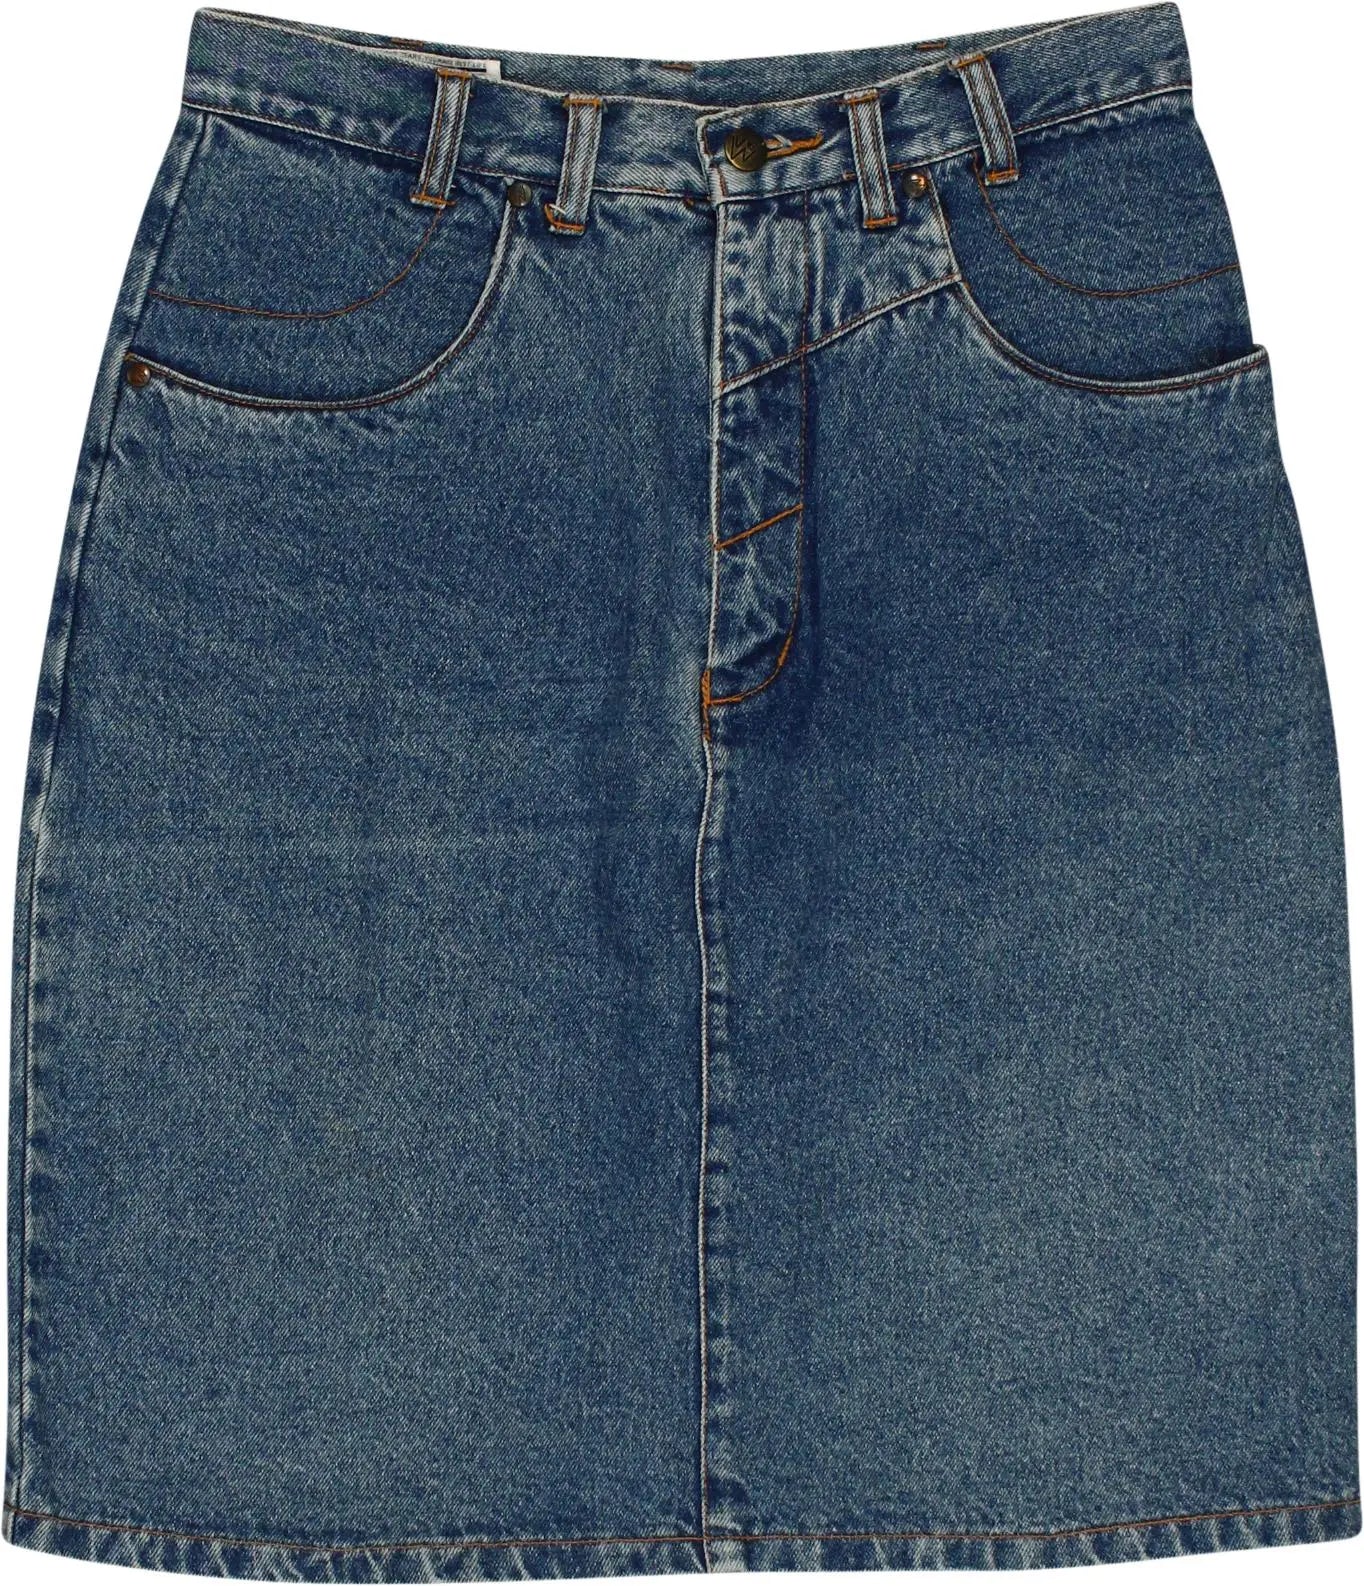 Walker Wear - Denim midi skirt- ThriftTale.com - Vintage and second handclothing